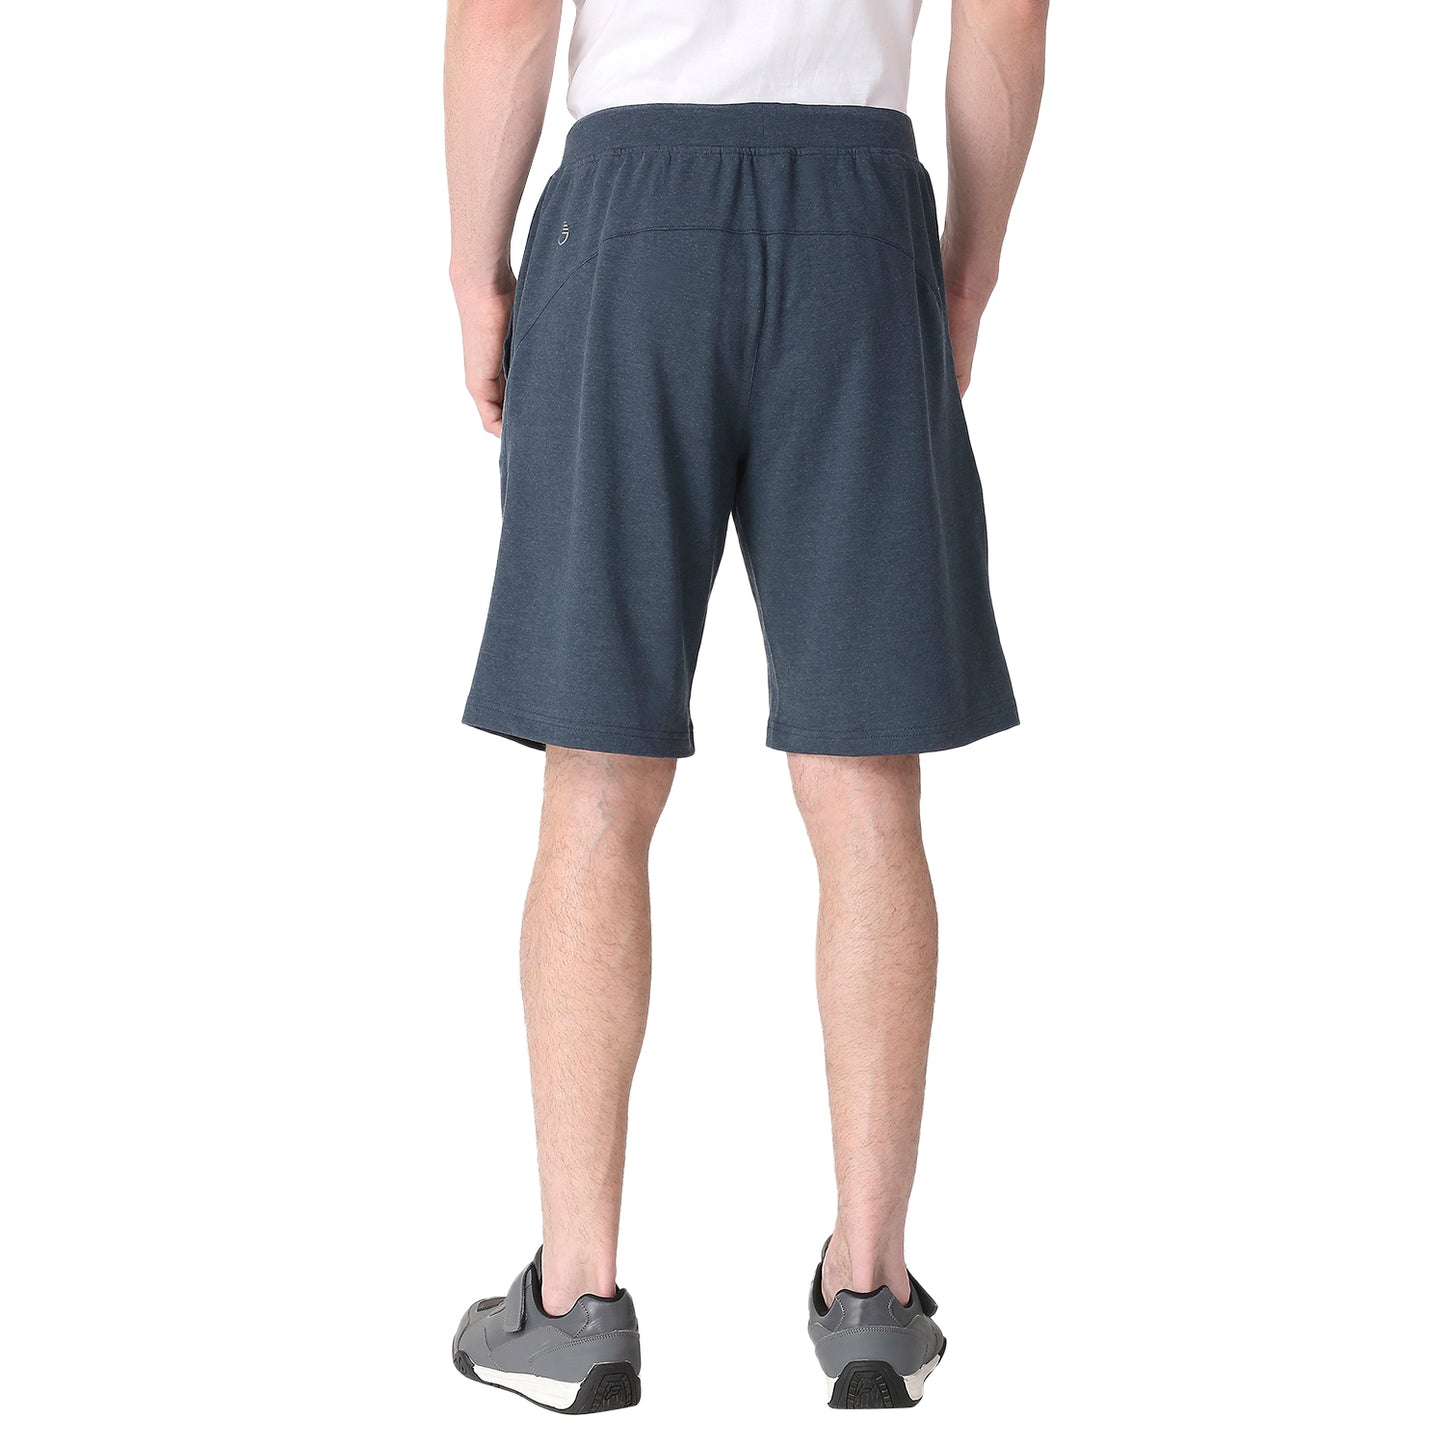 AthleX Shorts